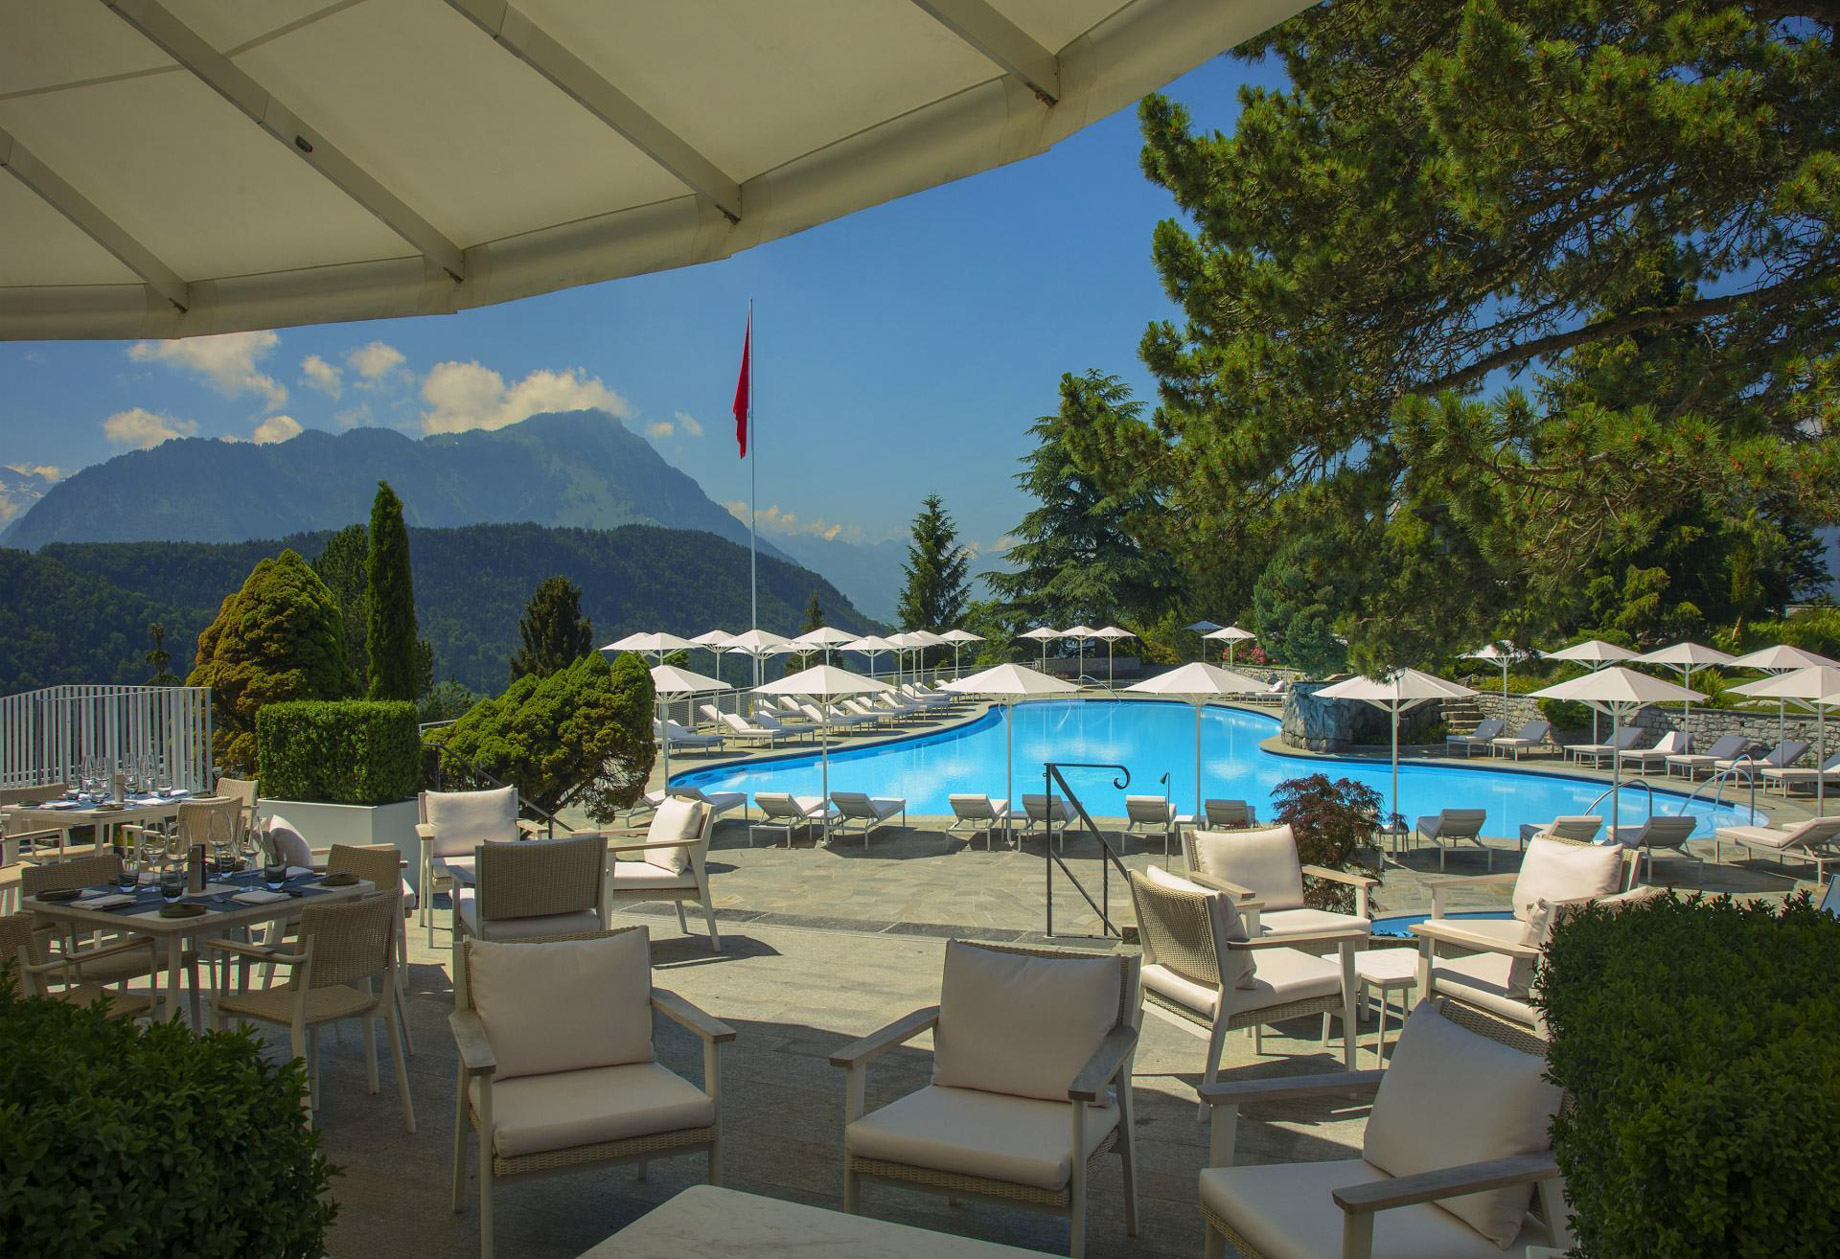 Burgenstock Hotel & Alpine Spa – Obburgen, Switzerland – Oak Grill & Pool Patio Restaurant Exterior Pool Terrace Dining